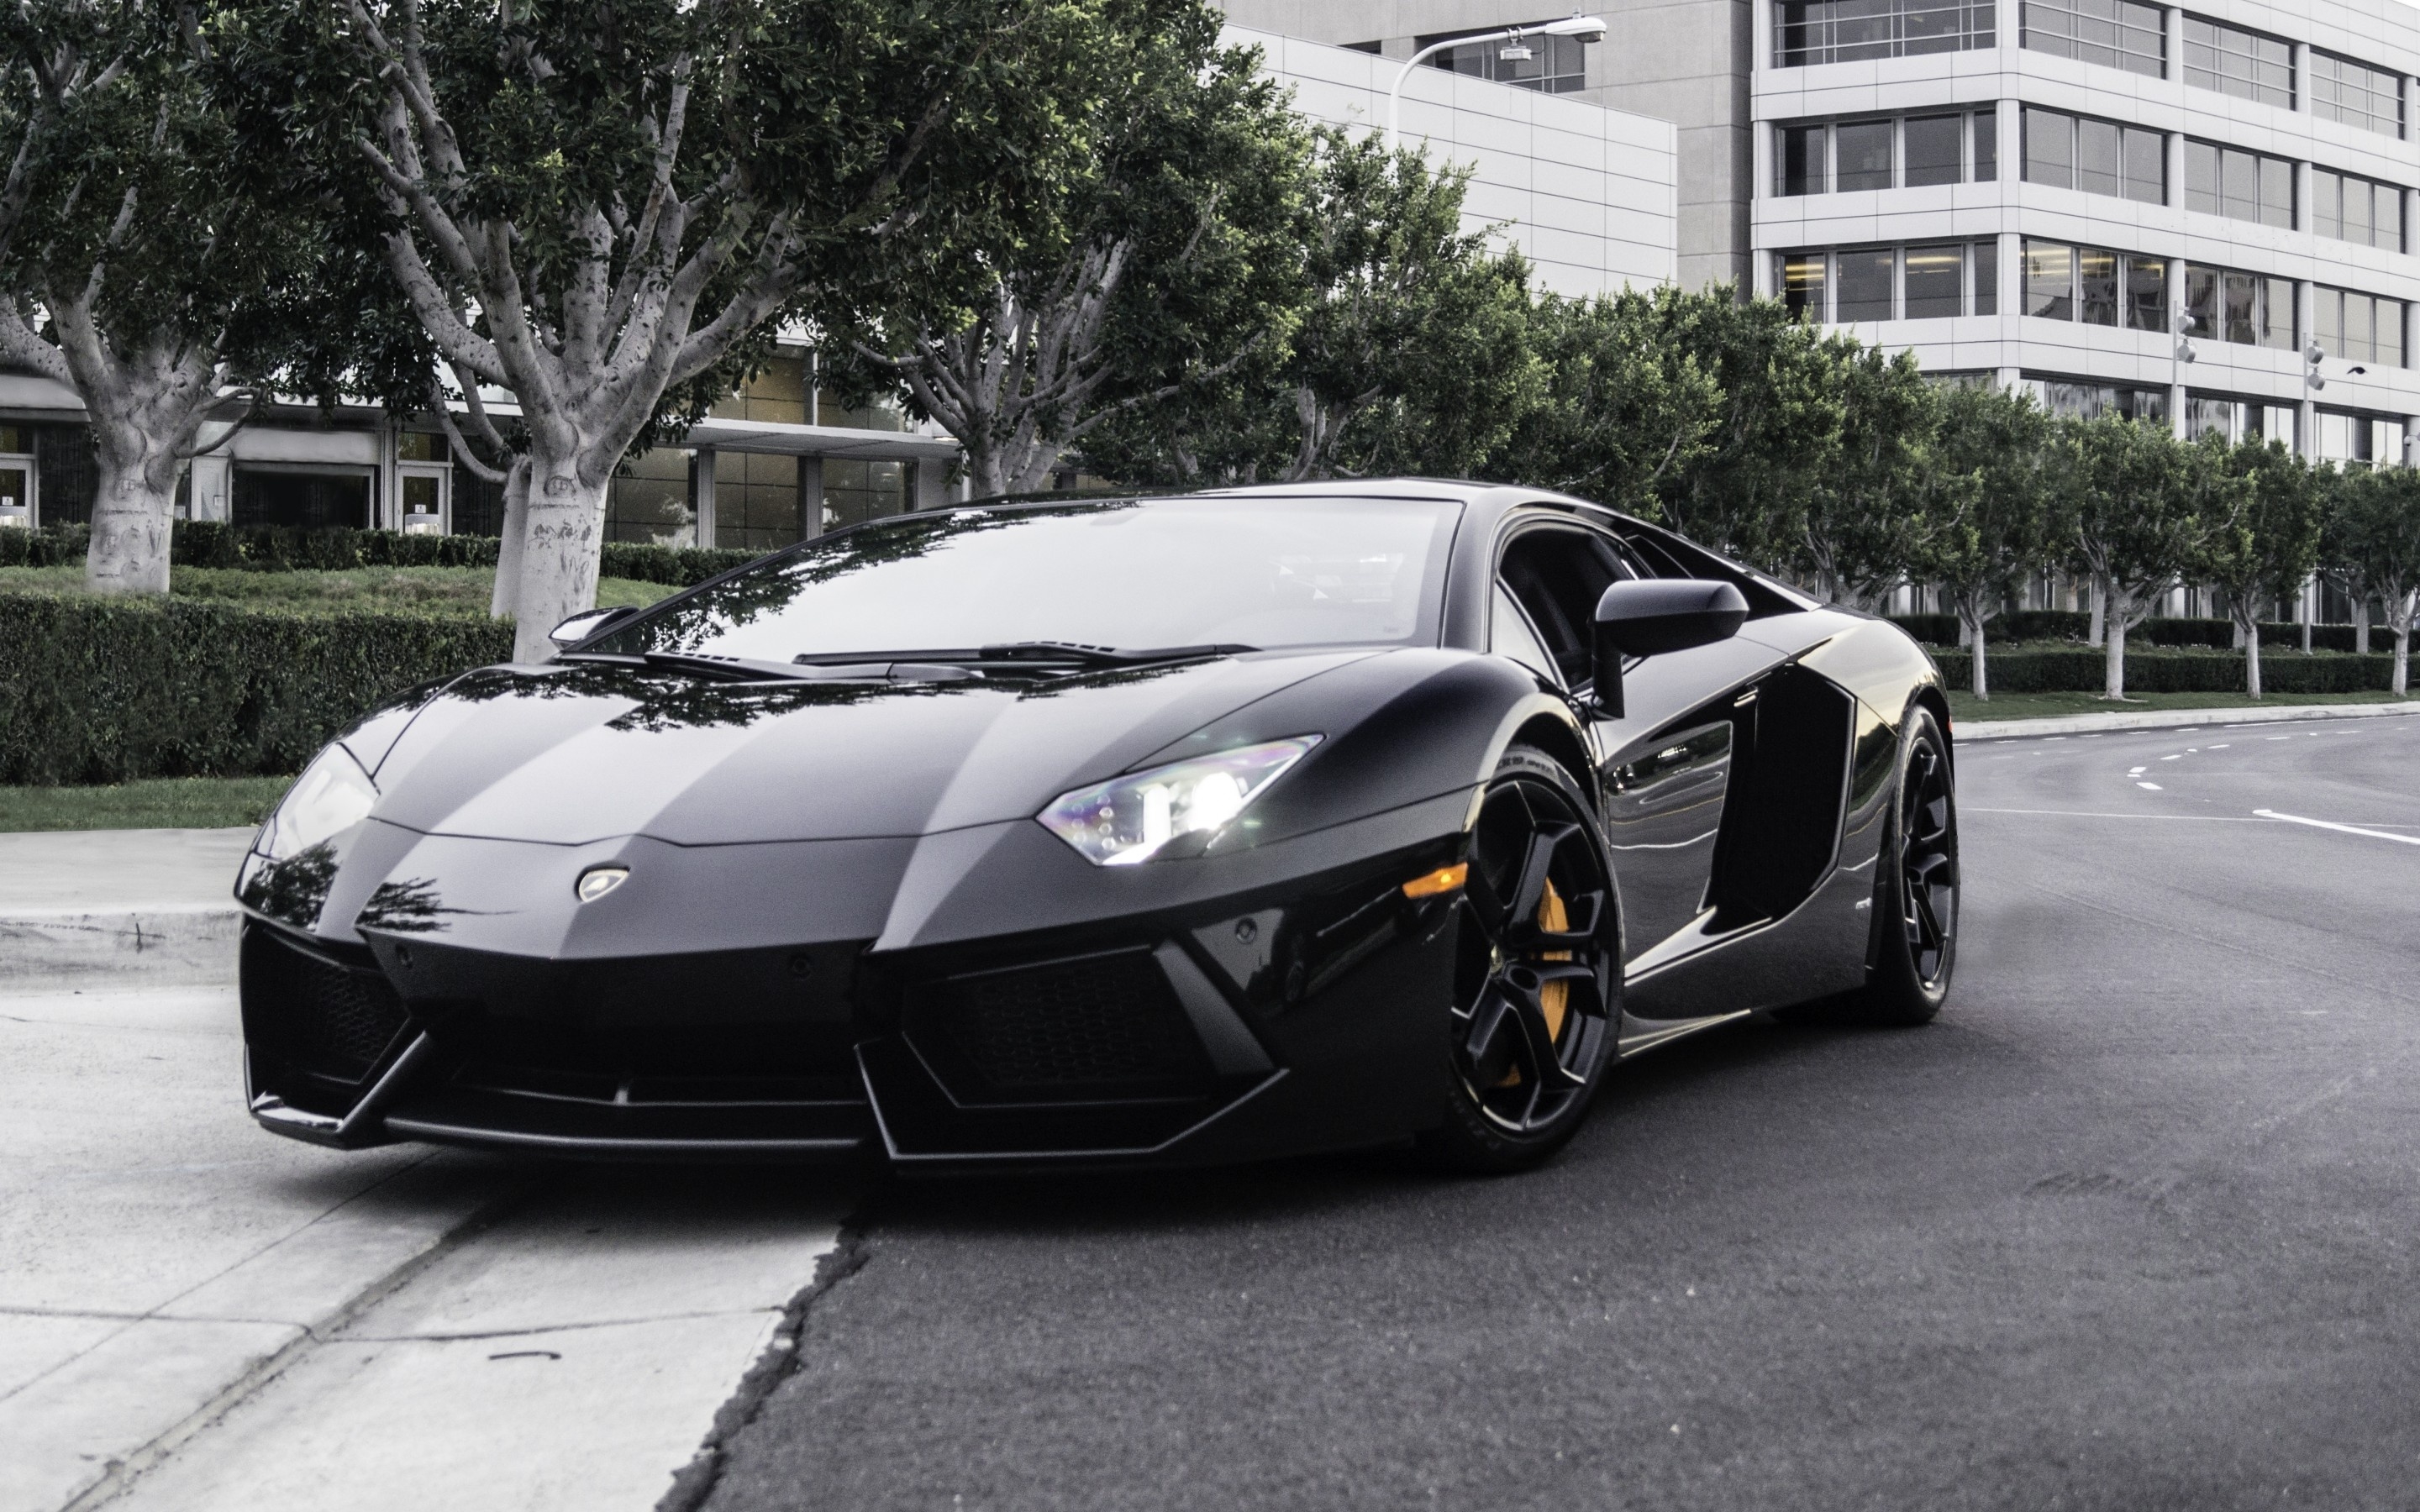 Popular Lamborghini background images